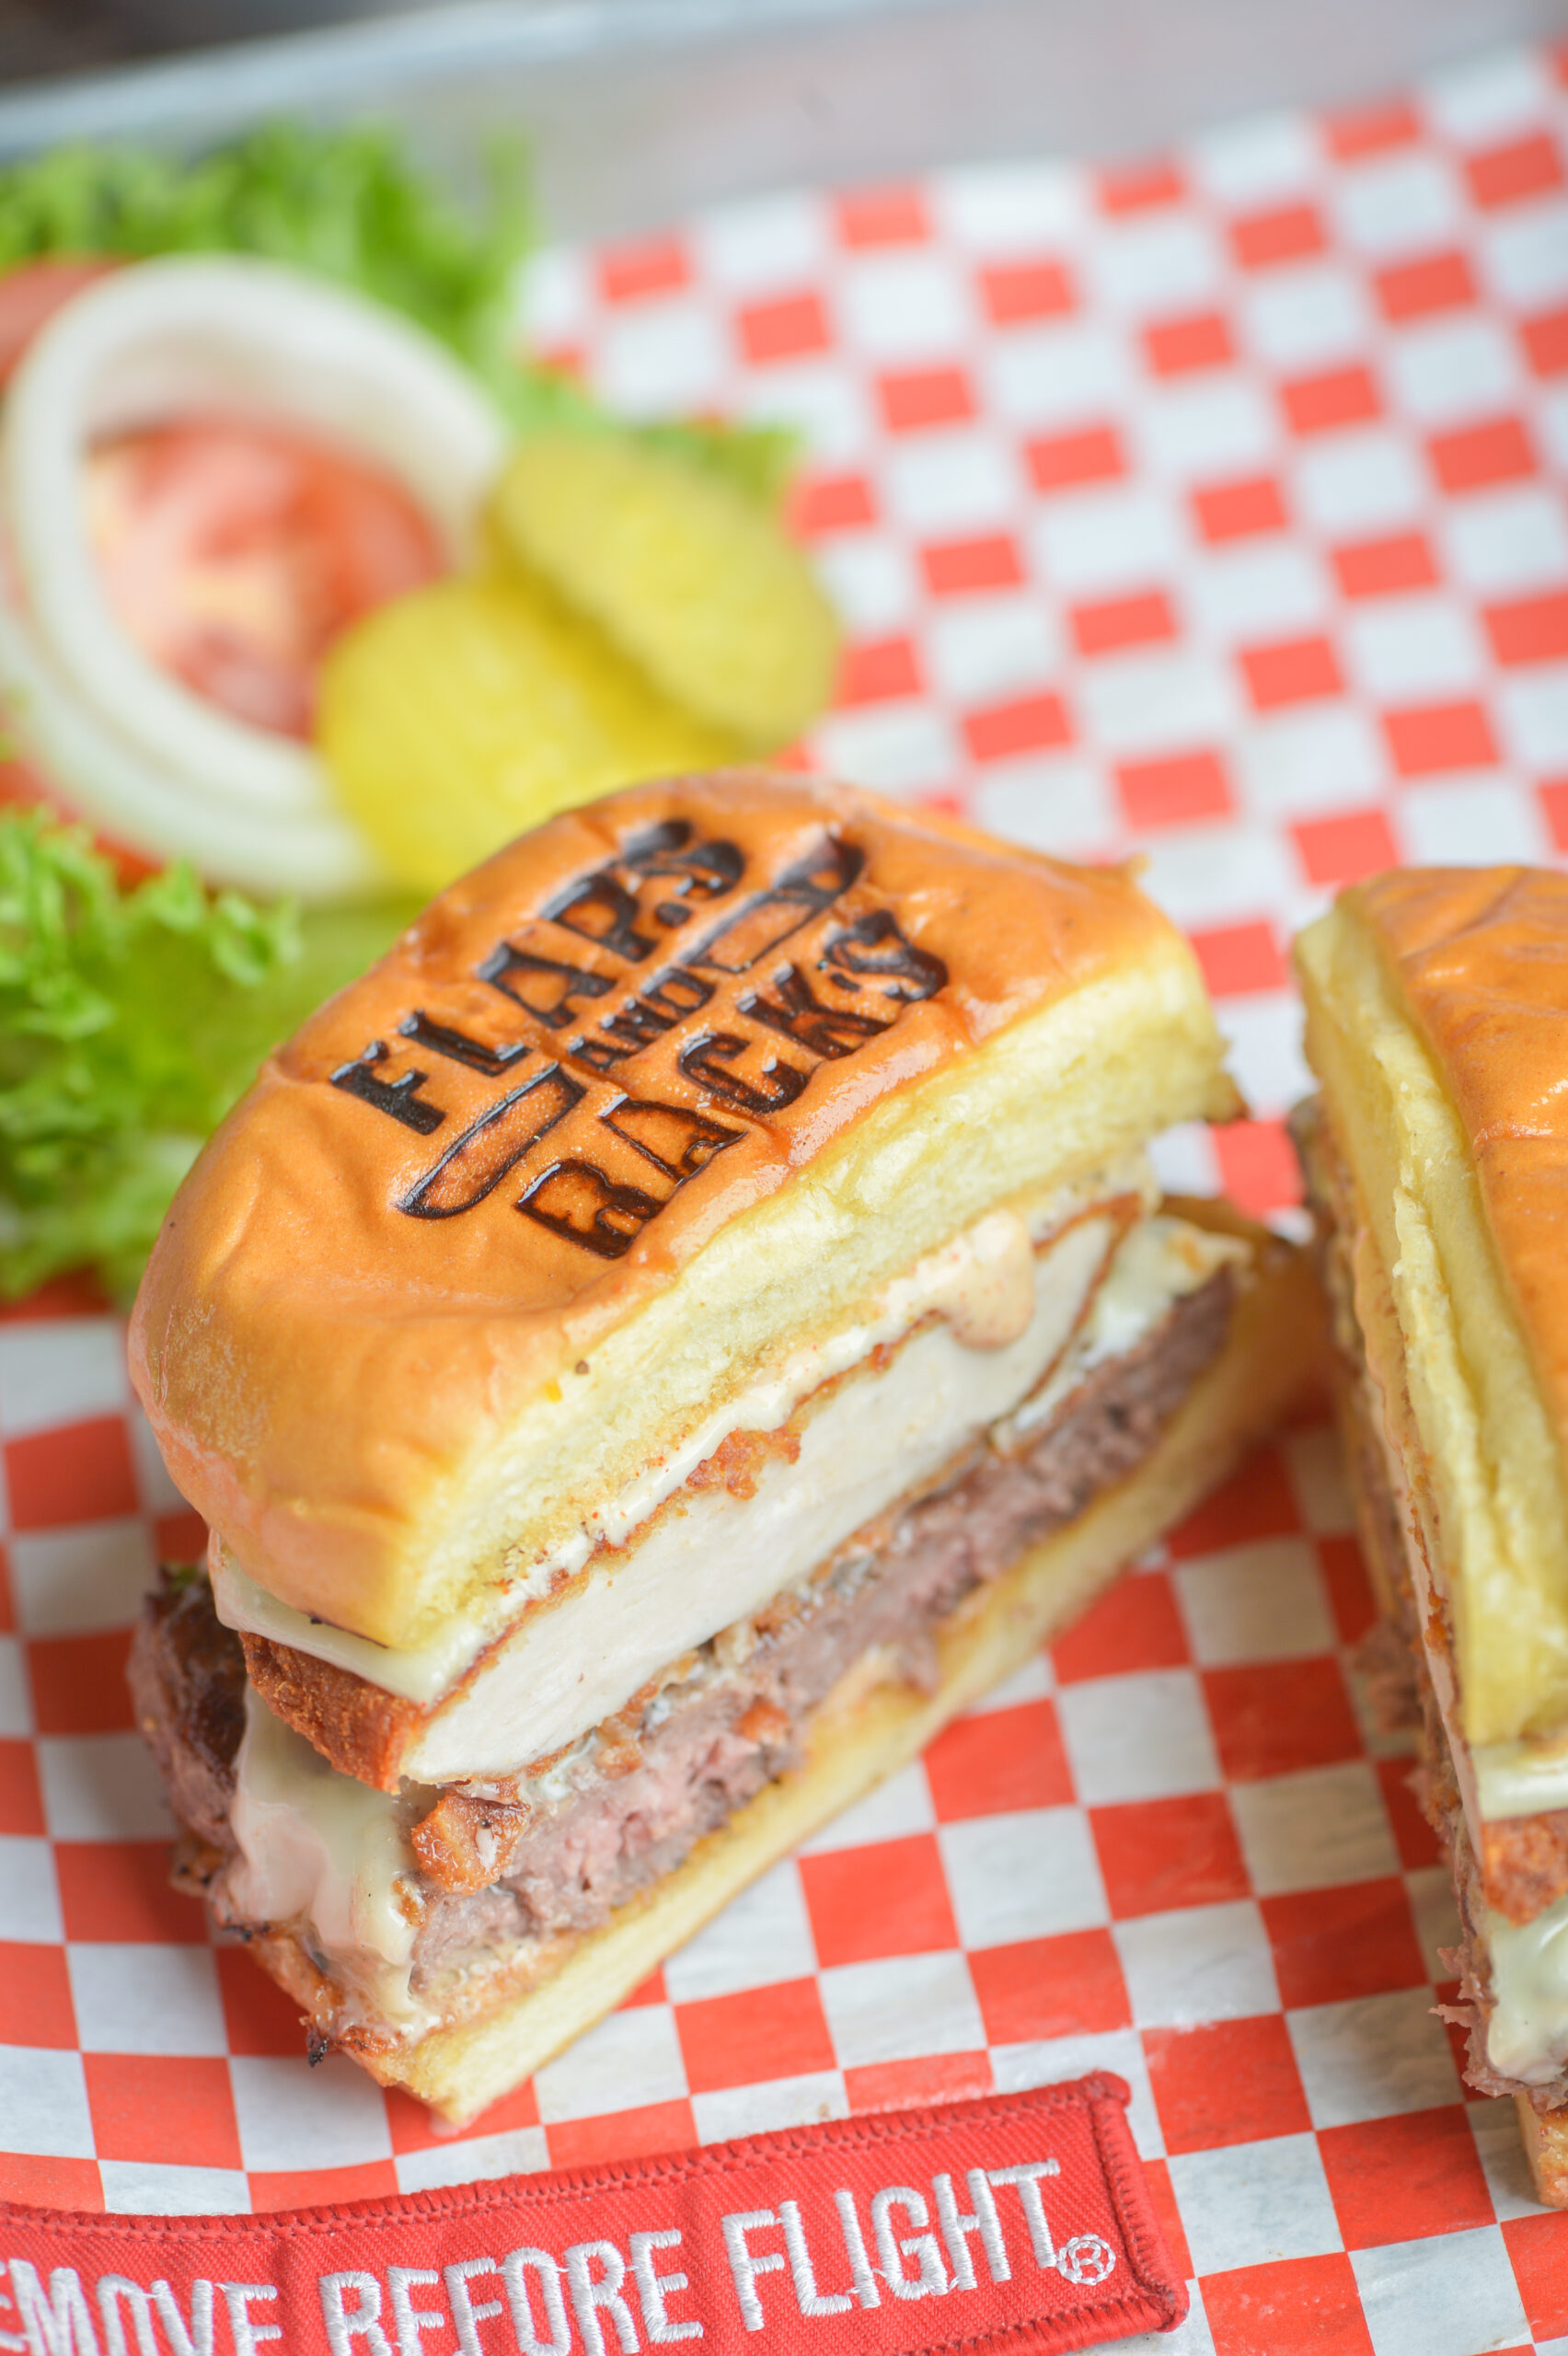 Flaps and Racks, Tucson, yummy burger